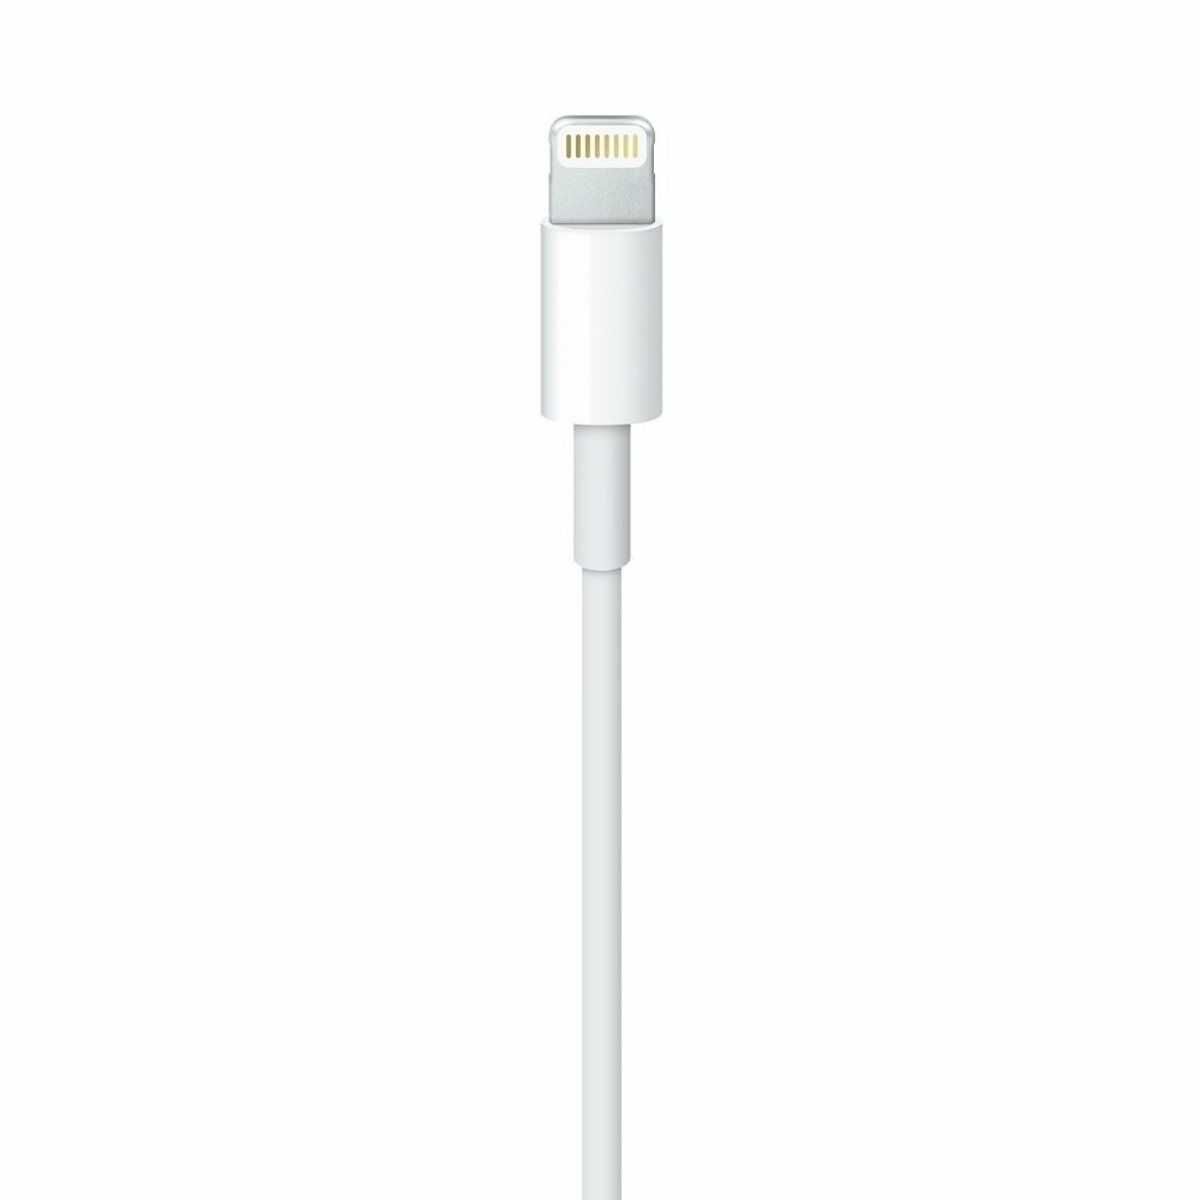 NOVO Cabo carregador USB Lightning iPhone 5 5s 6 7 8 X